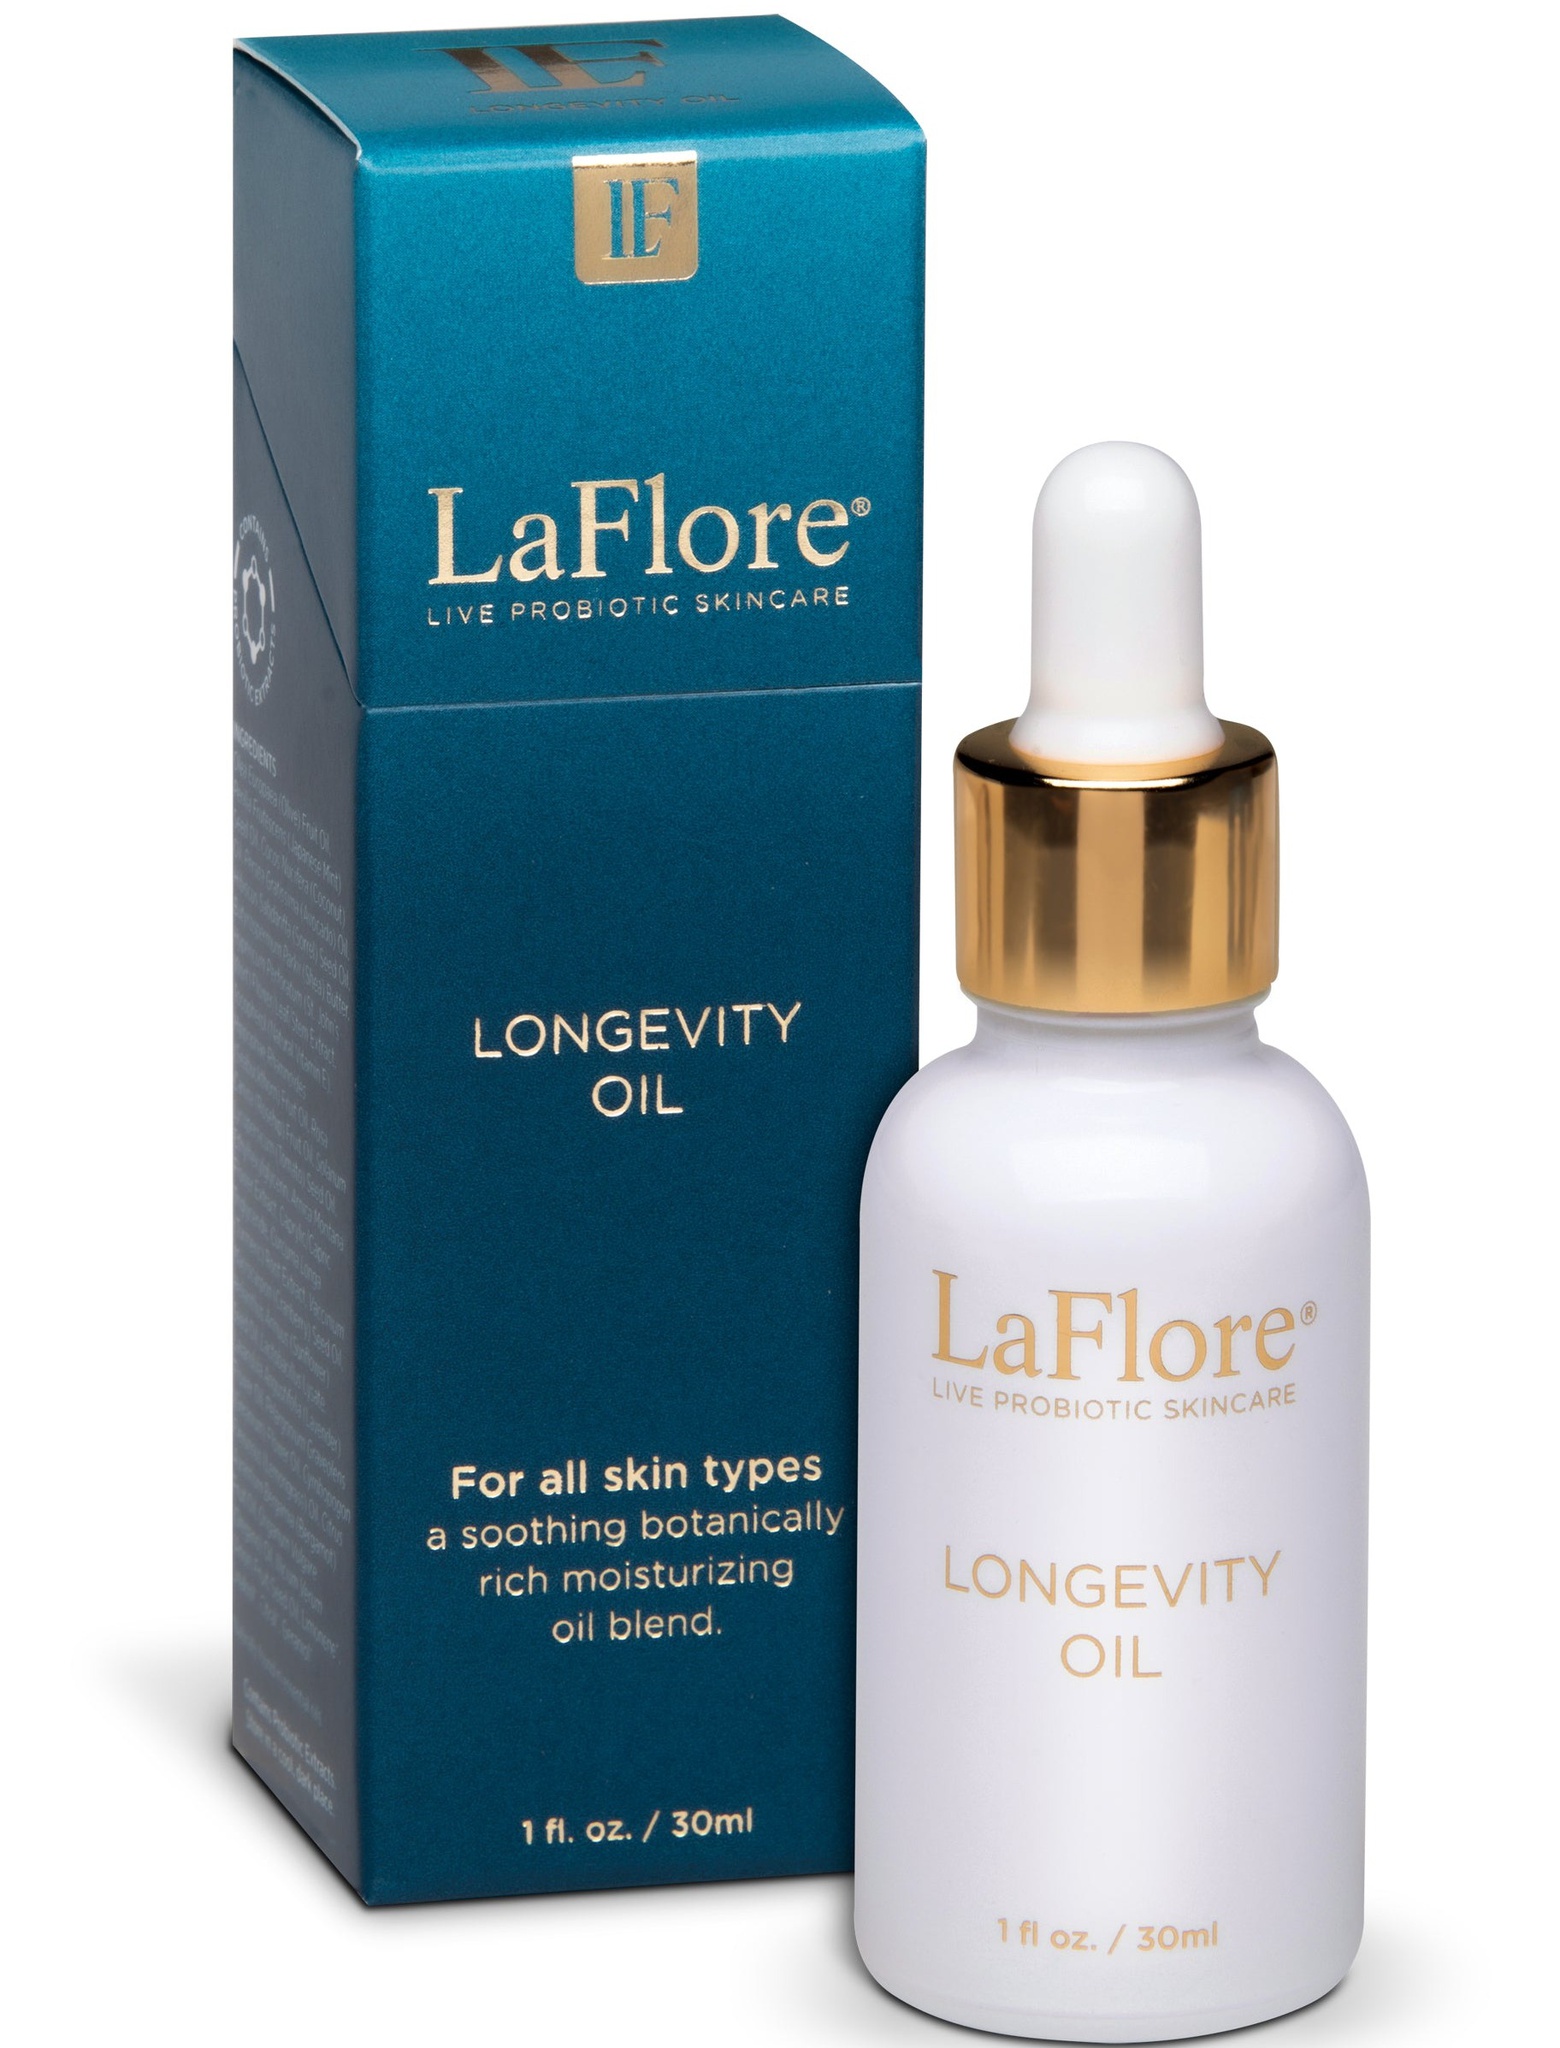 LaFlore Live Probiotic Skincare Longevity Oil